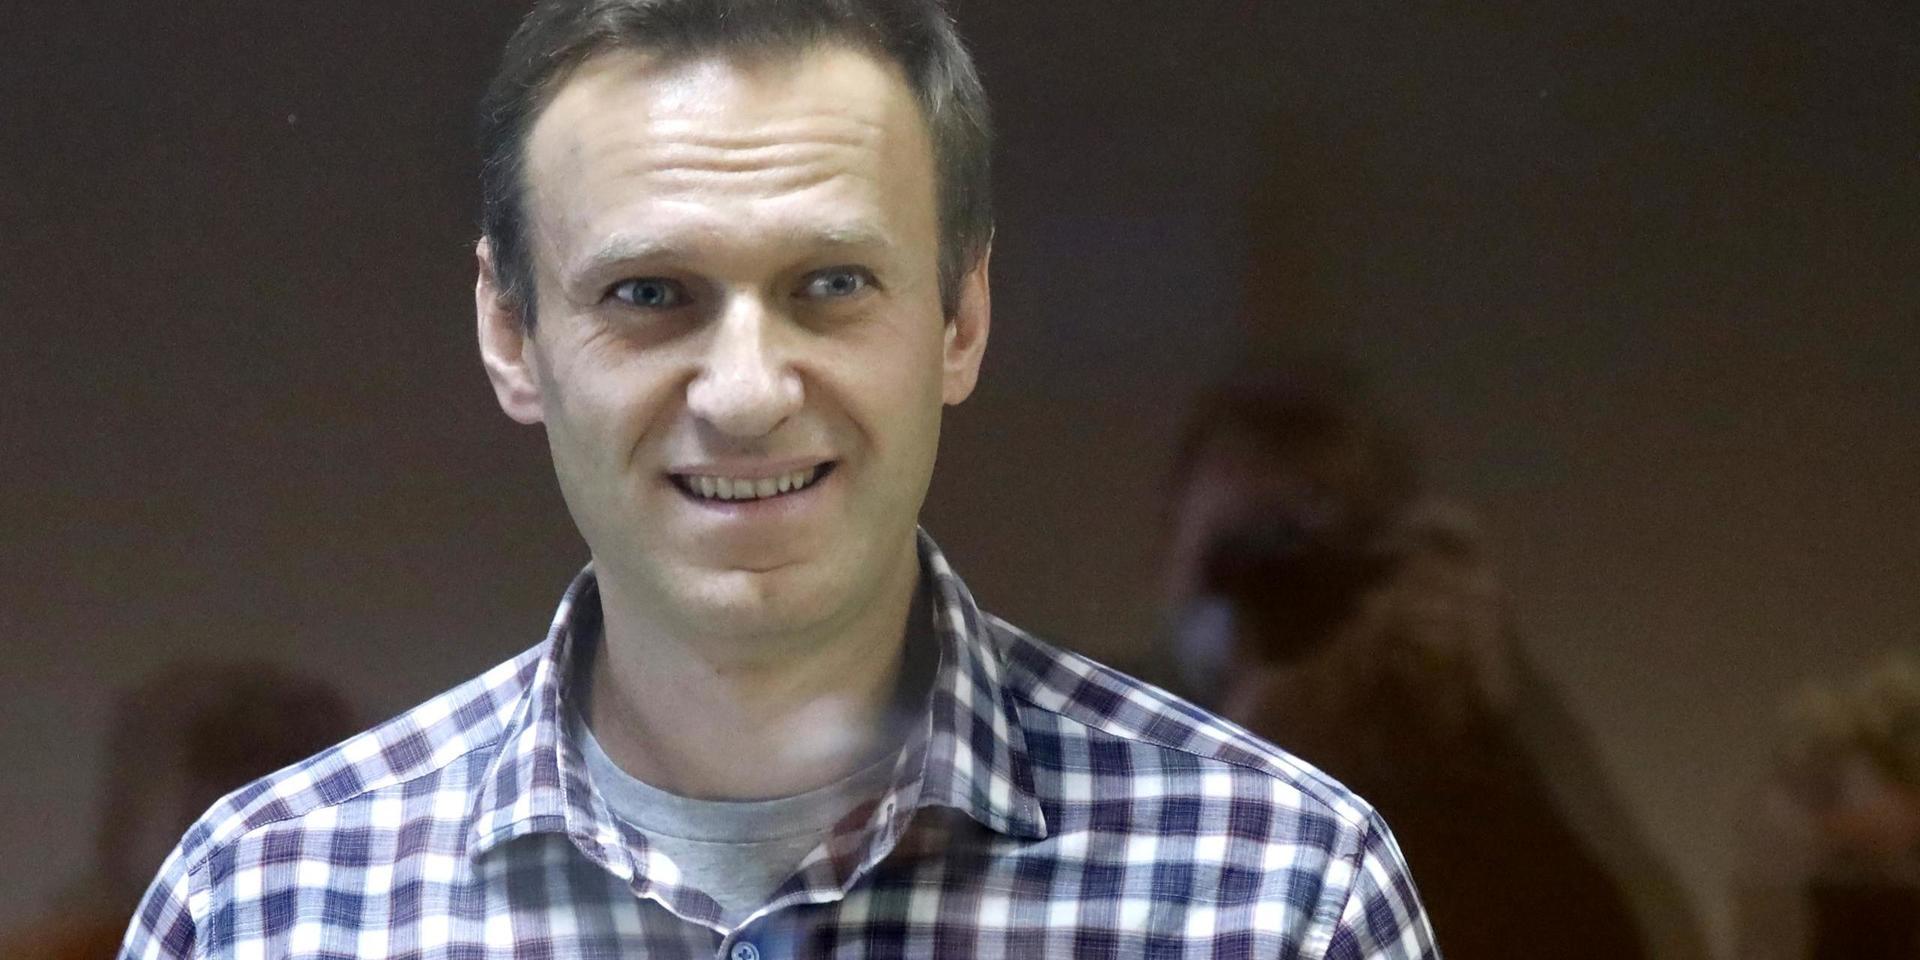 Ryske oppositionsledaren Aleksej Navalnyj hungerstrejkar. Arkivbild.